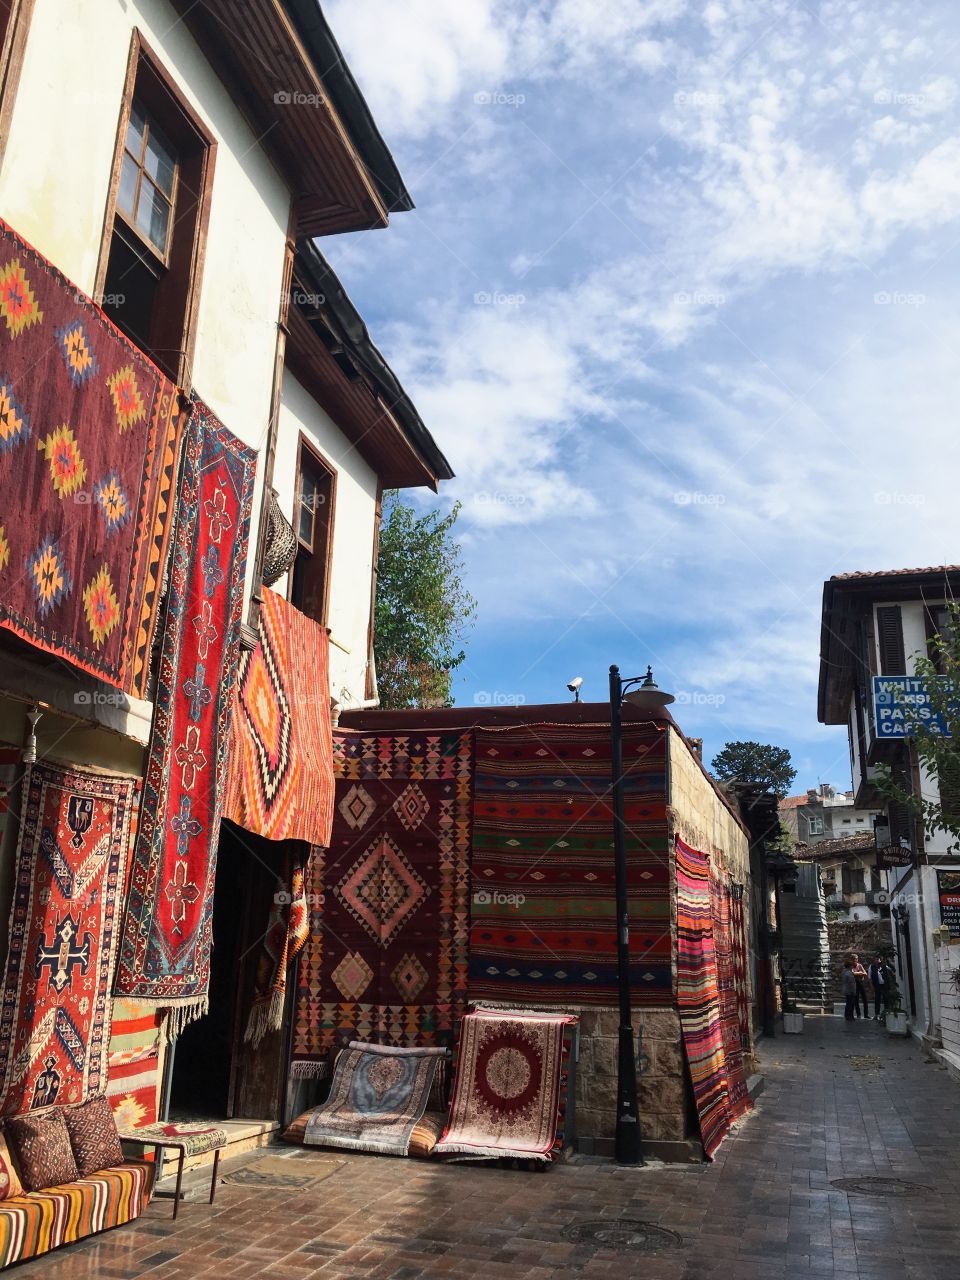 Selling Turkish carpets on the street in Antalya.